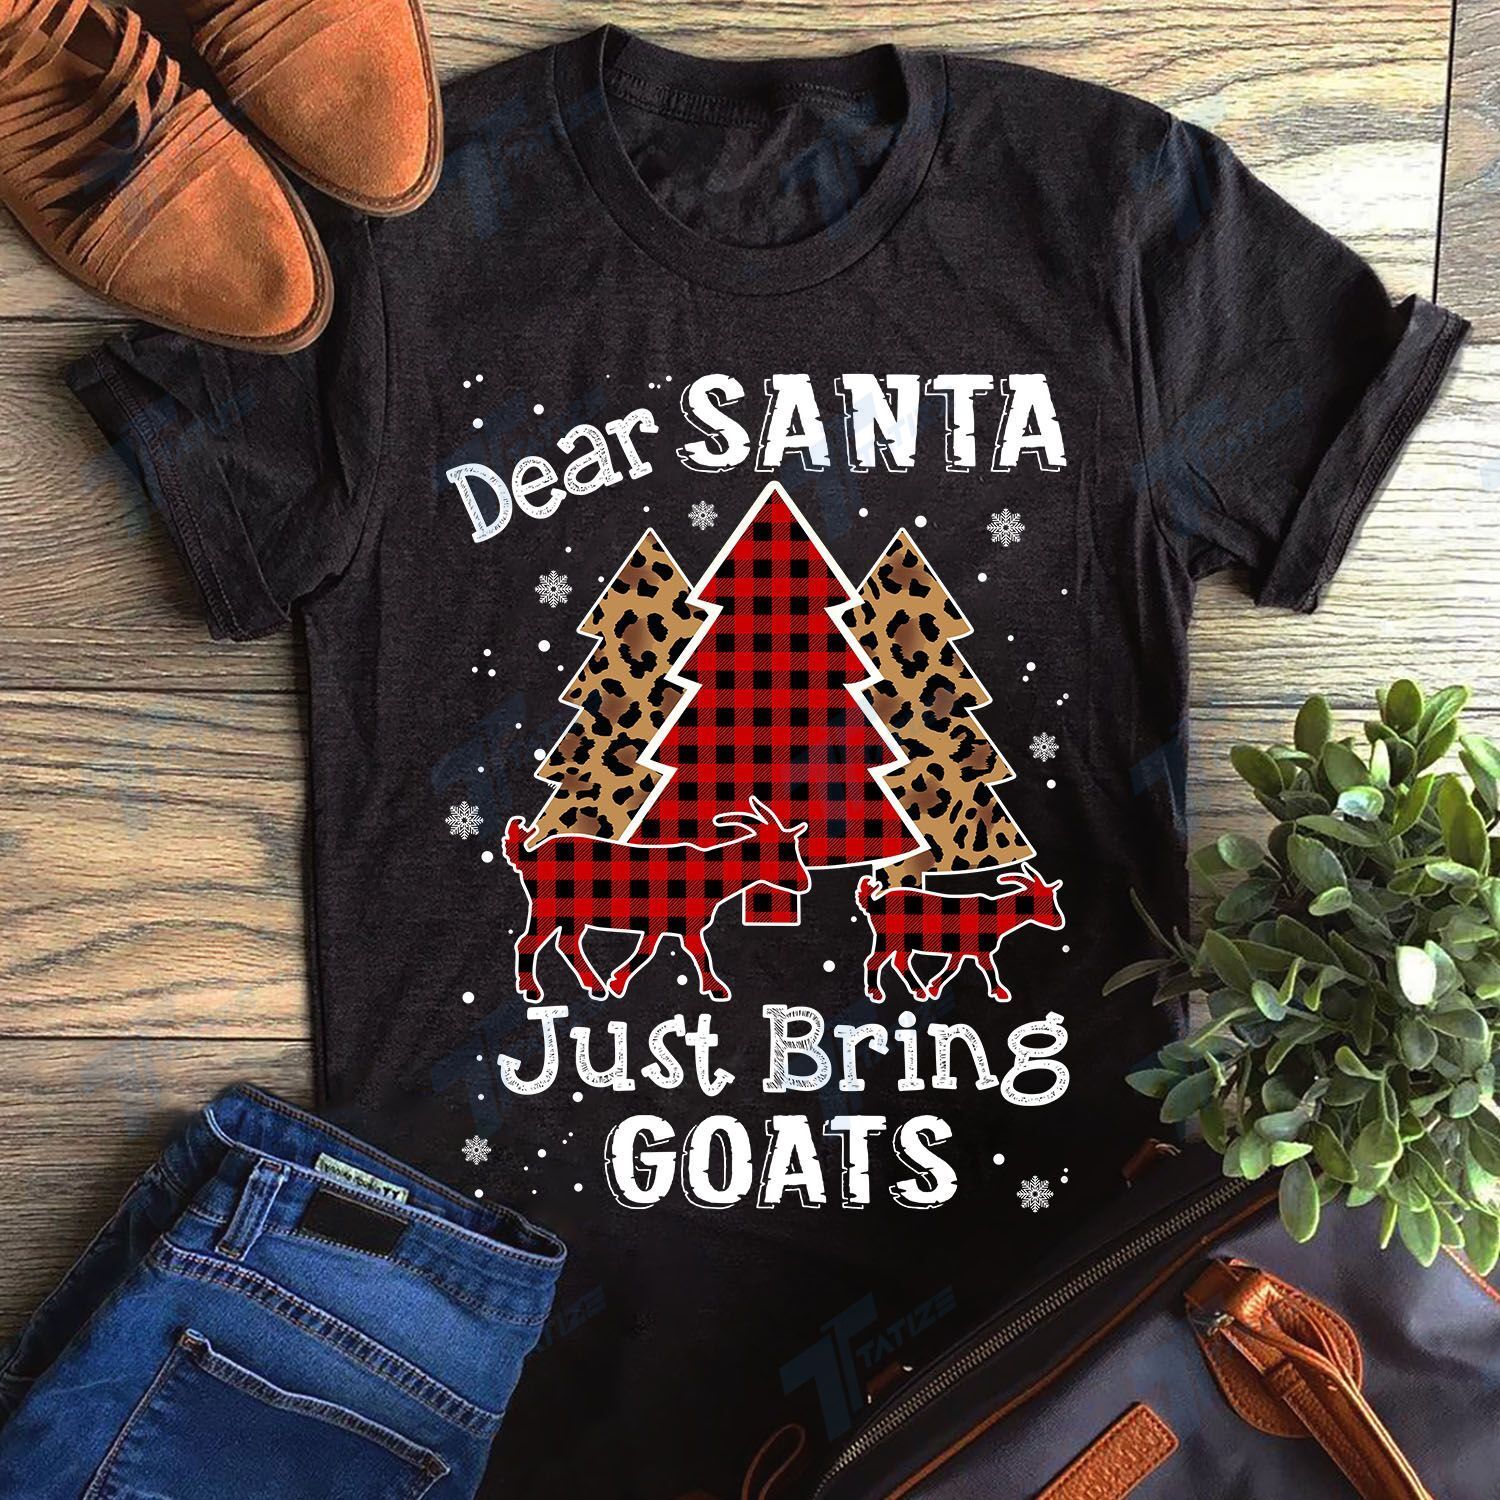 Dear Santa Just Bring Goats Funny Farm Goat Christmas Graphic Unisex T Shirt, Sweatshirt, Hoodie Size S – 5XL